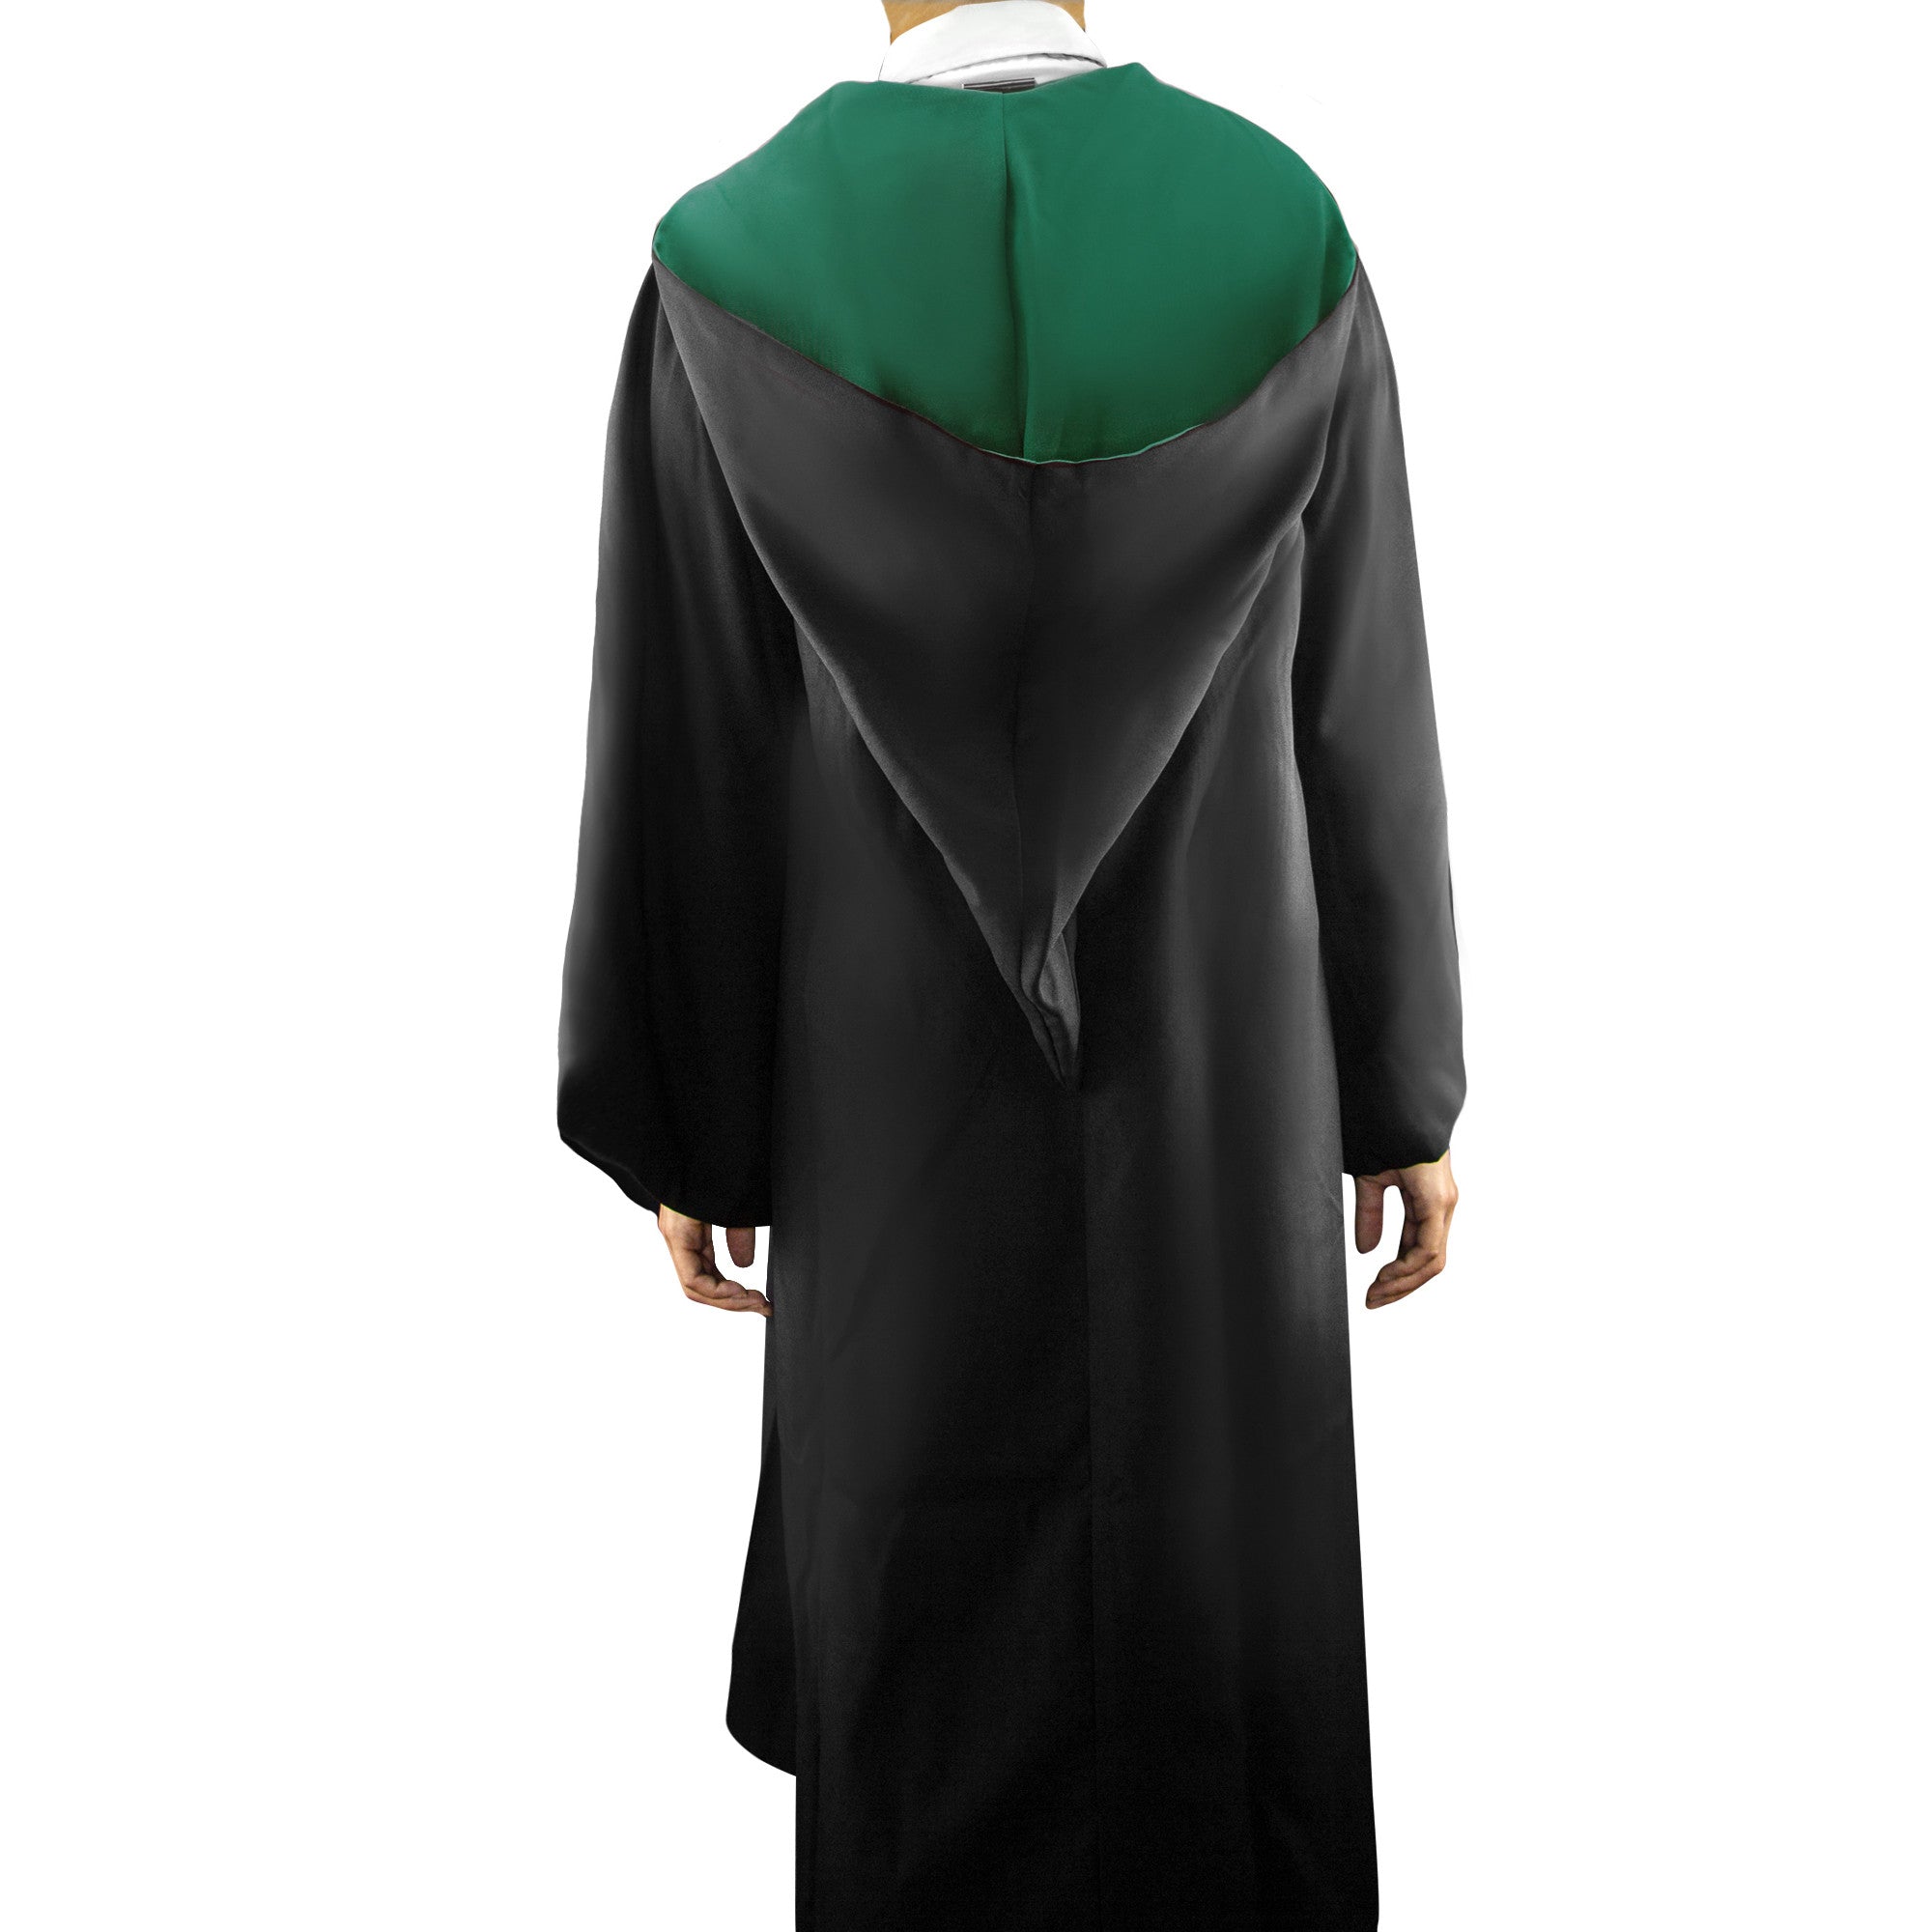 Halloweentown Store: Harry Potter Slytherin Robe Adult Deluxe Costume